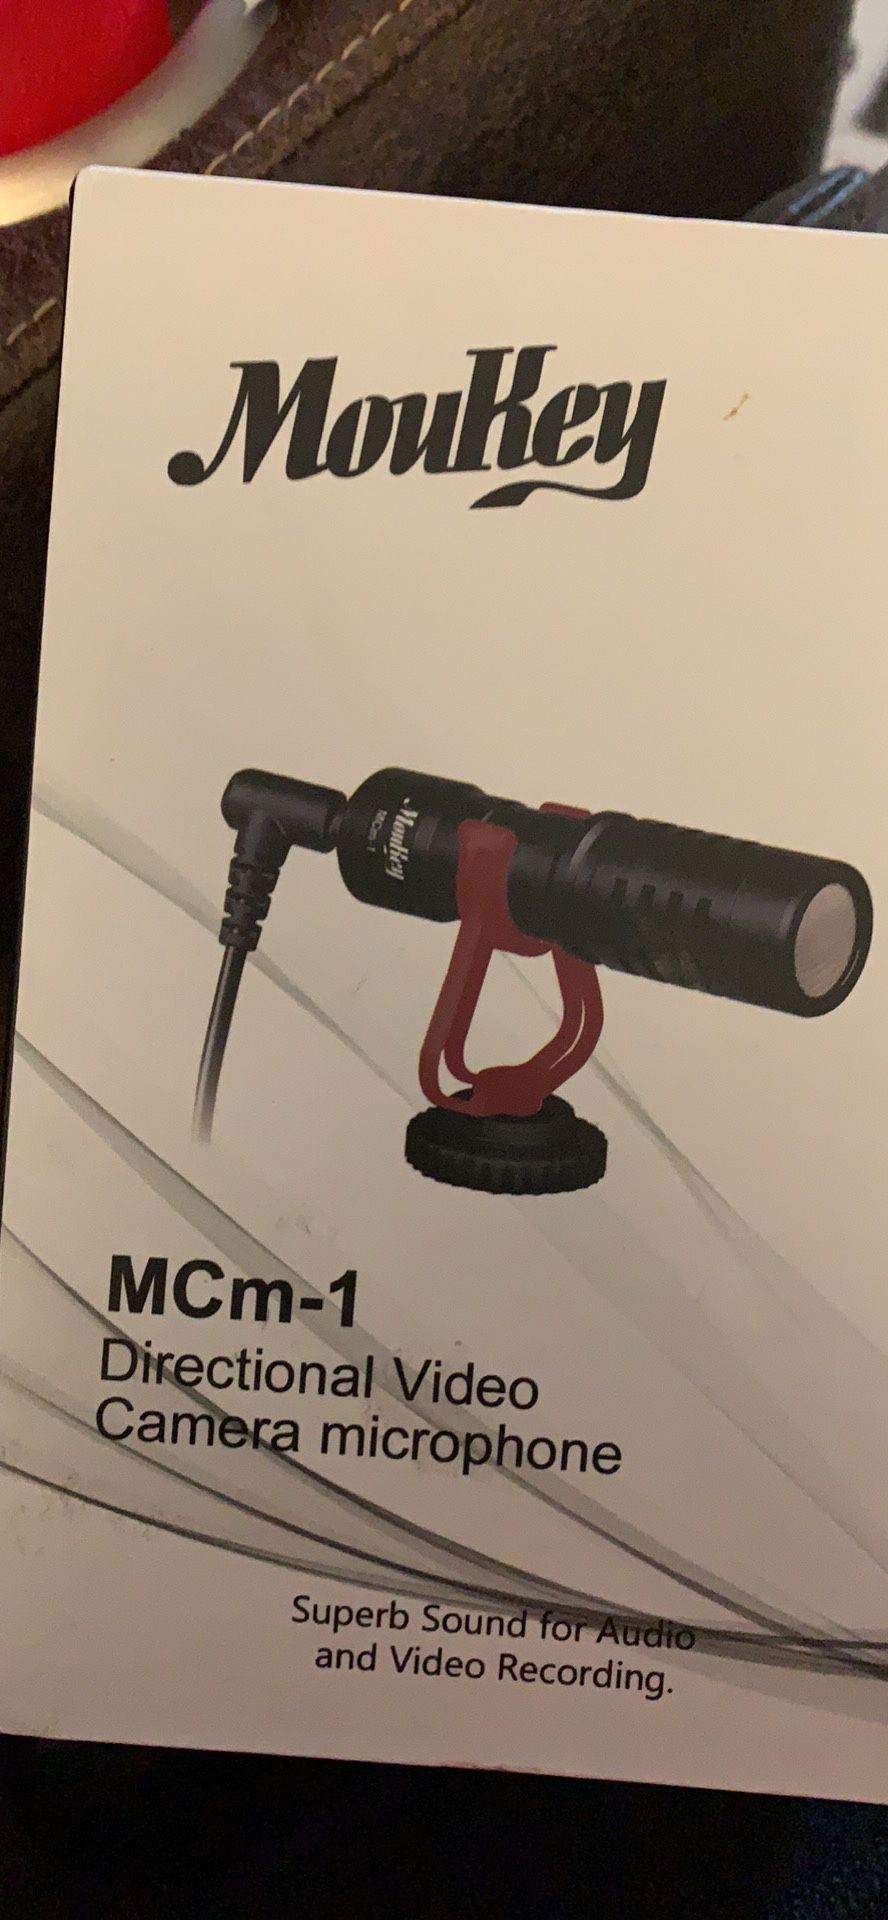 Moukey Microphones MCM-1 DSLR Camera Microphone, External Video Shotgun